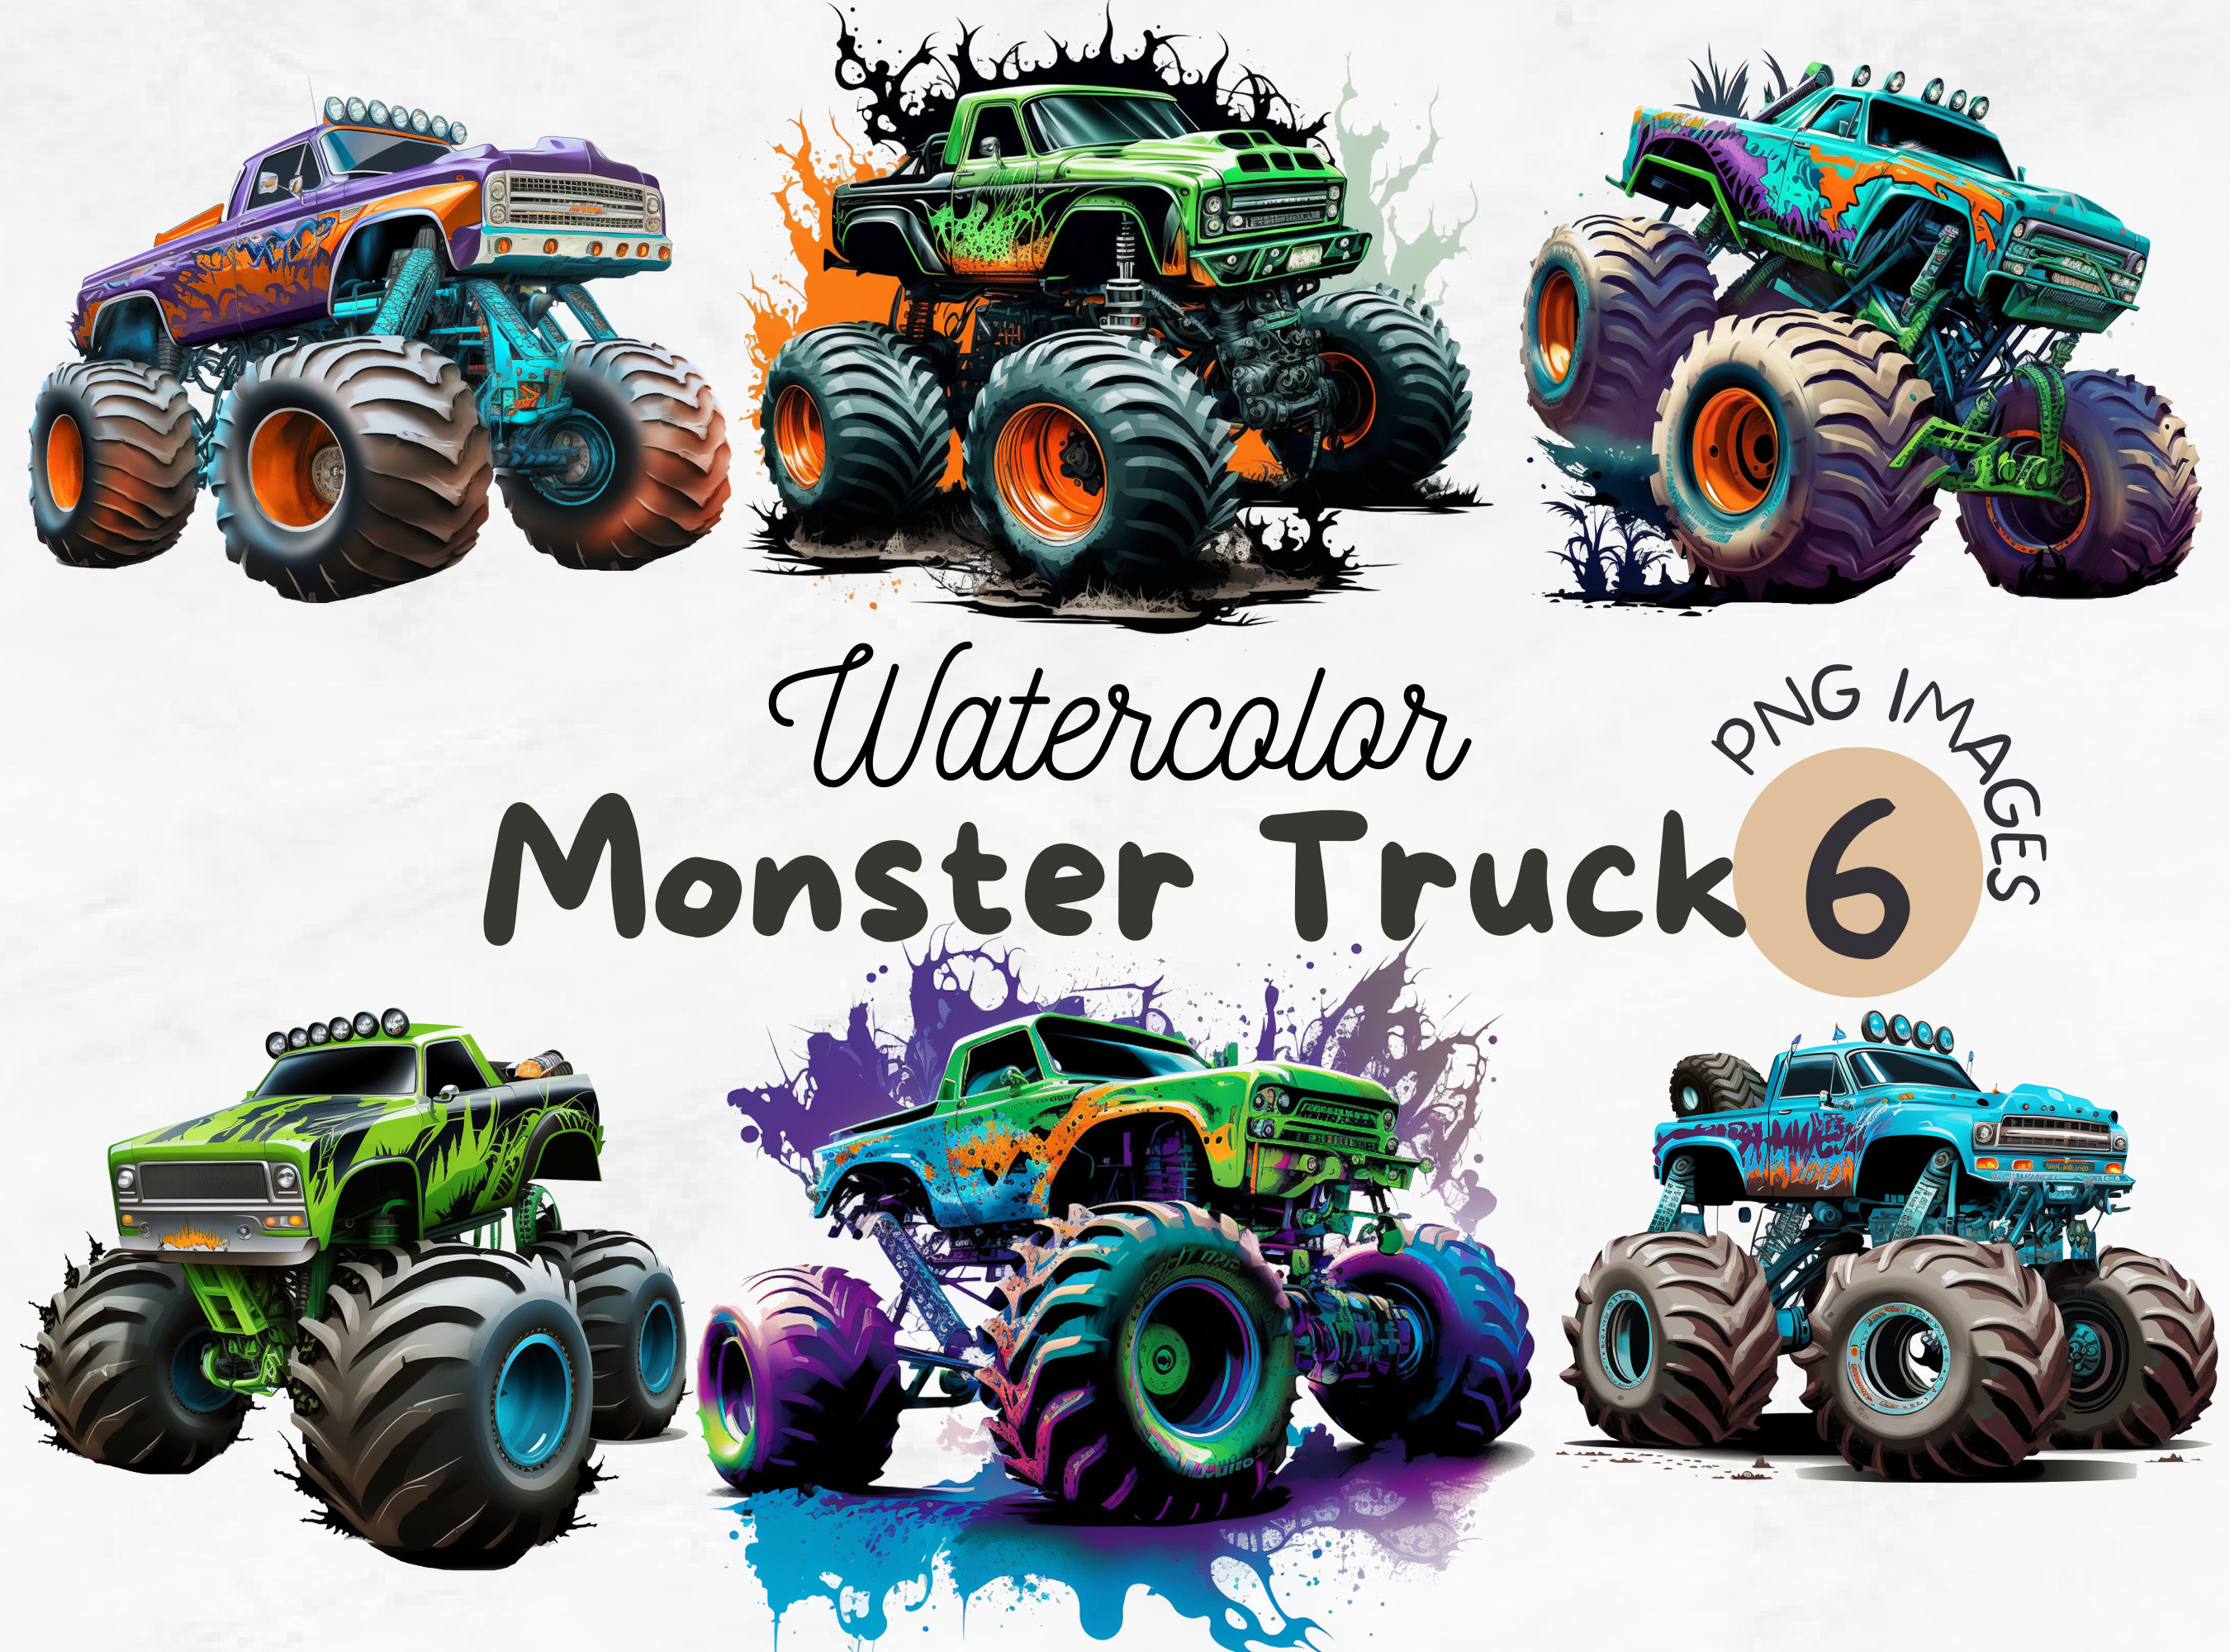 Hot Wheels 1:24 Scale Monster Truck Black Hotrod w/ Skull and Flames Jam